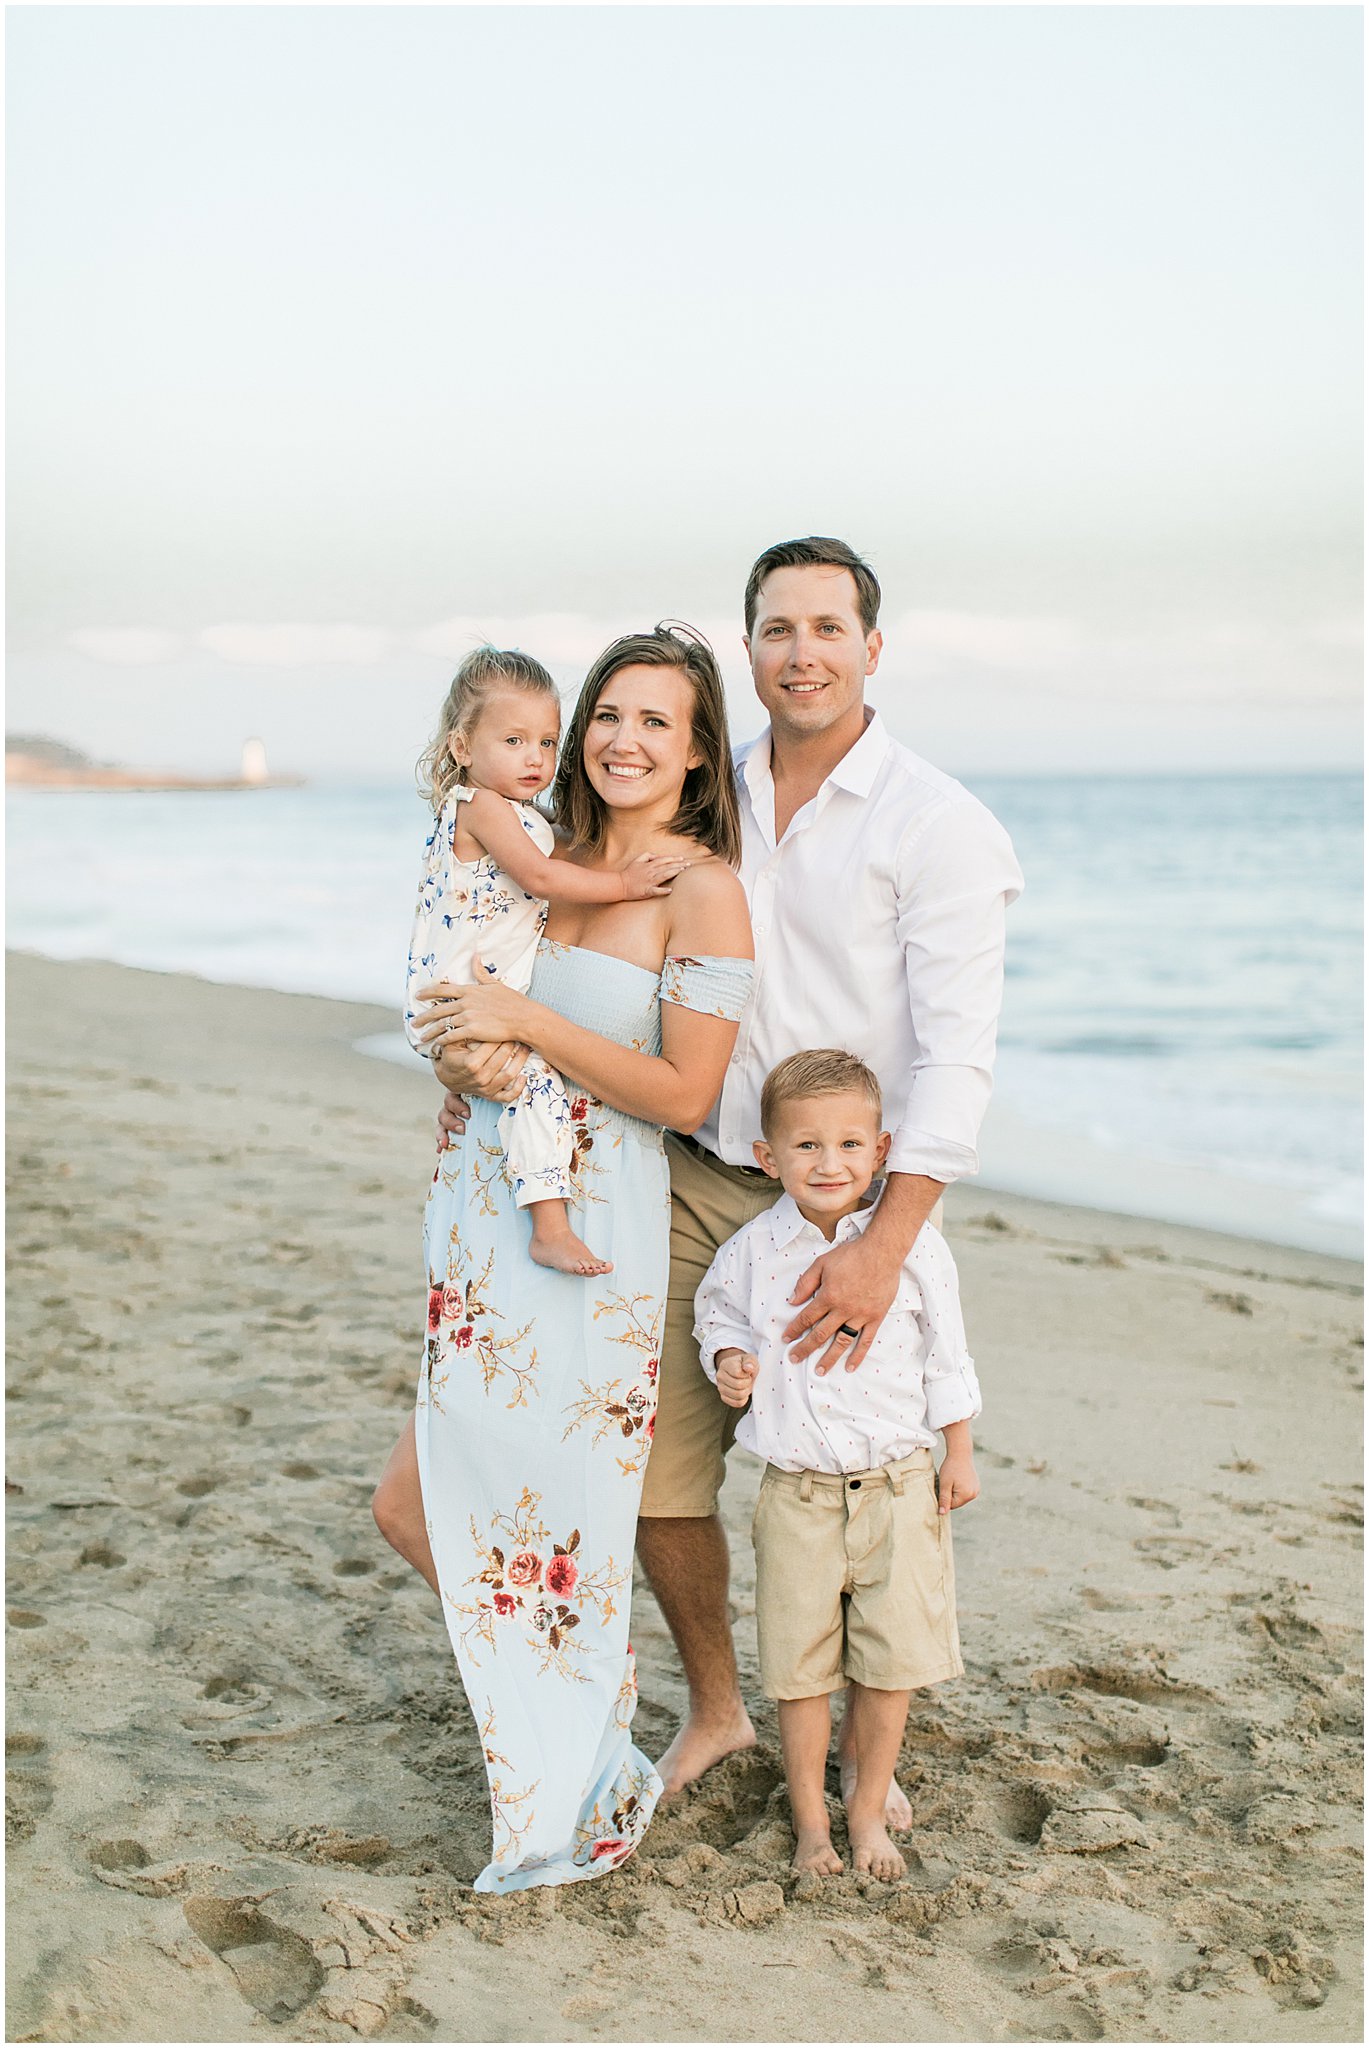 santa cruz beach family portrait session california wedding photographer angela sue photography_0031.jpg